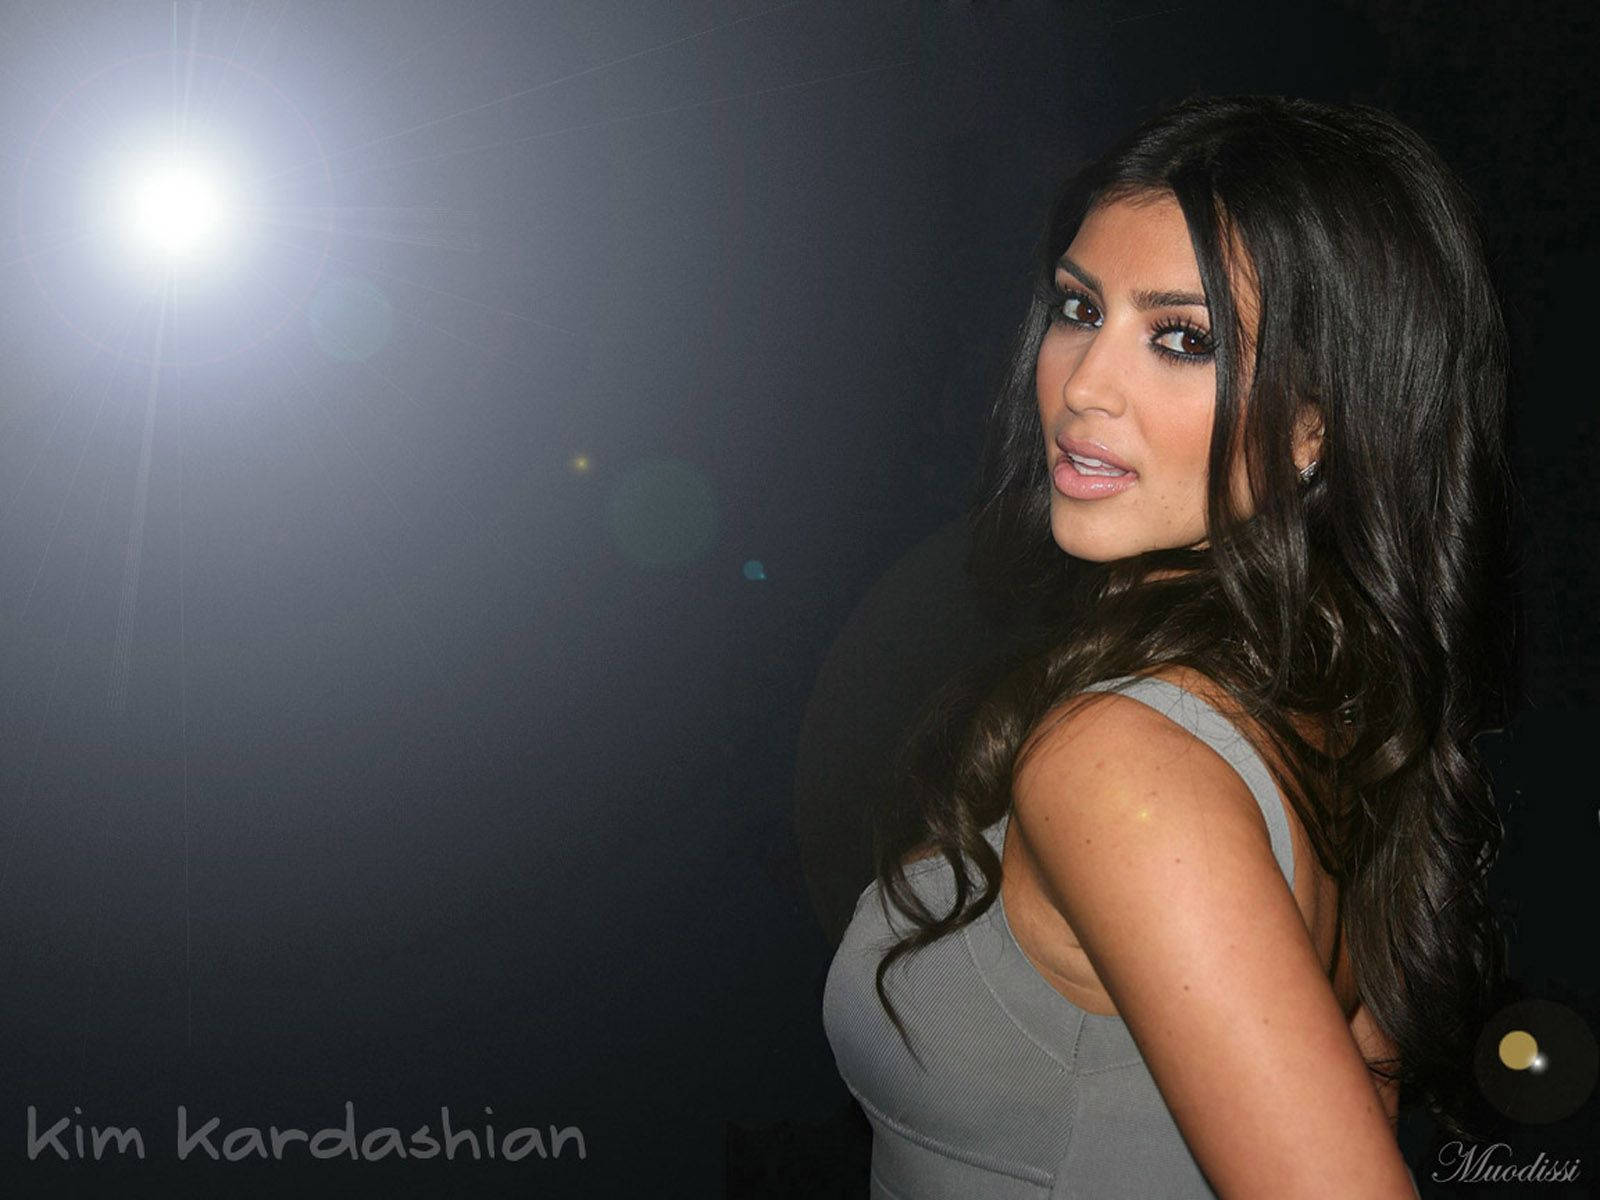 Young Kim Kardashian Portrait Background